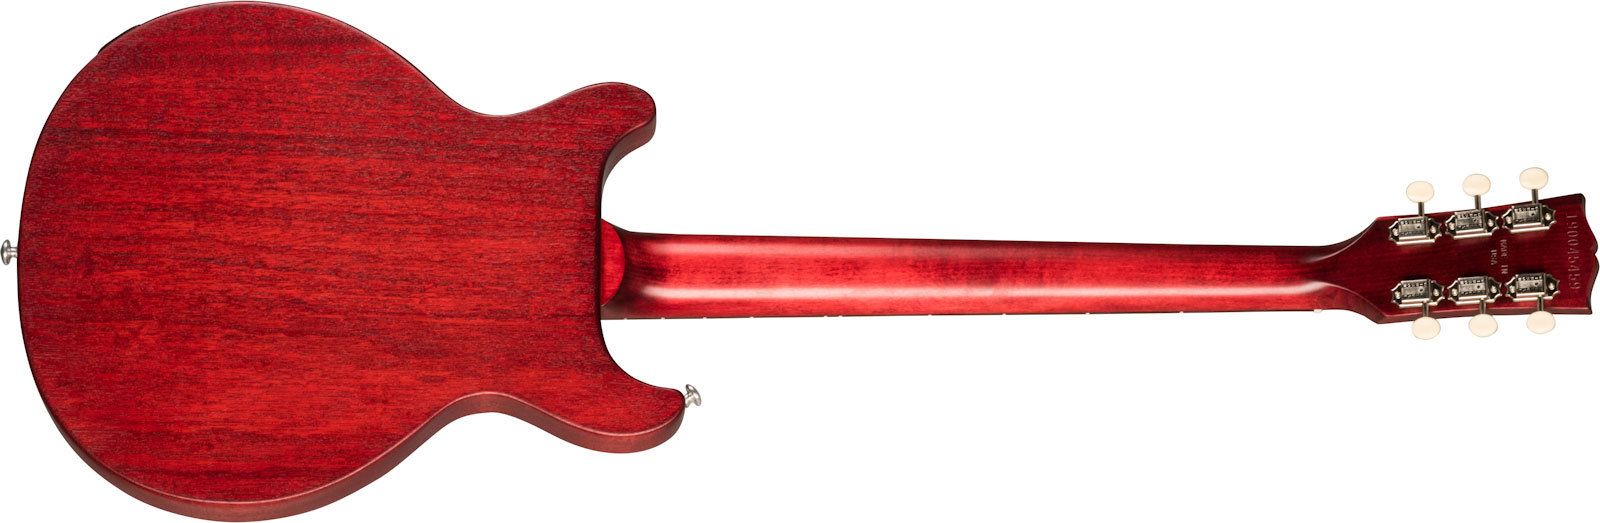 Gibson Les Paul Junior Tribute Dc Modern P90 - Worn Cherry - Double cut electric guitar - Variation 1